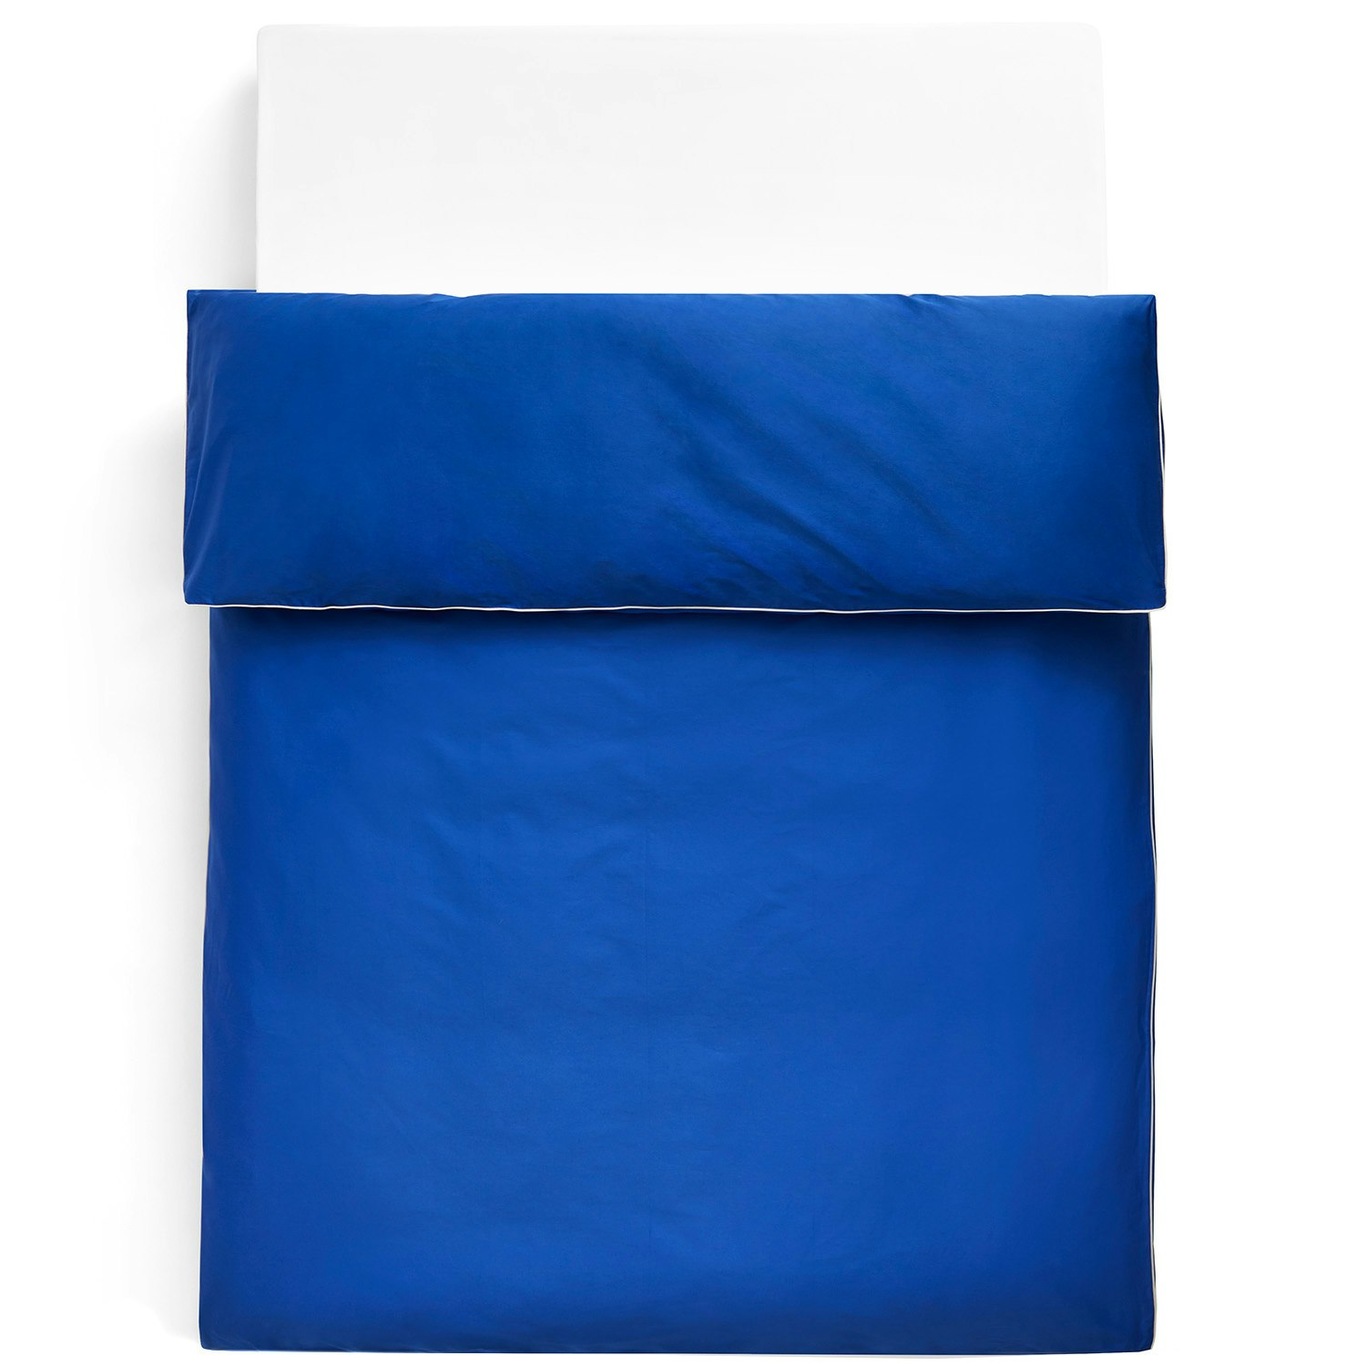 Outline Duvet Cover 150x210 cm, Vivid Blue